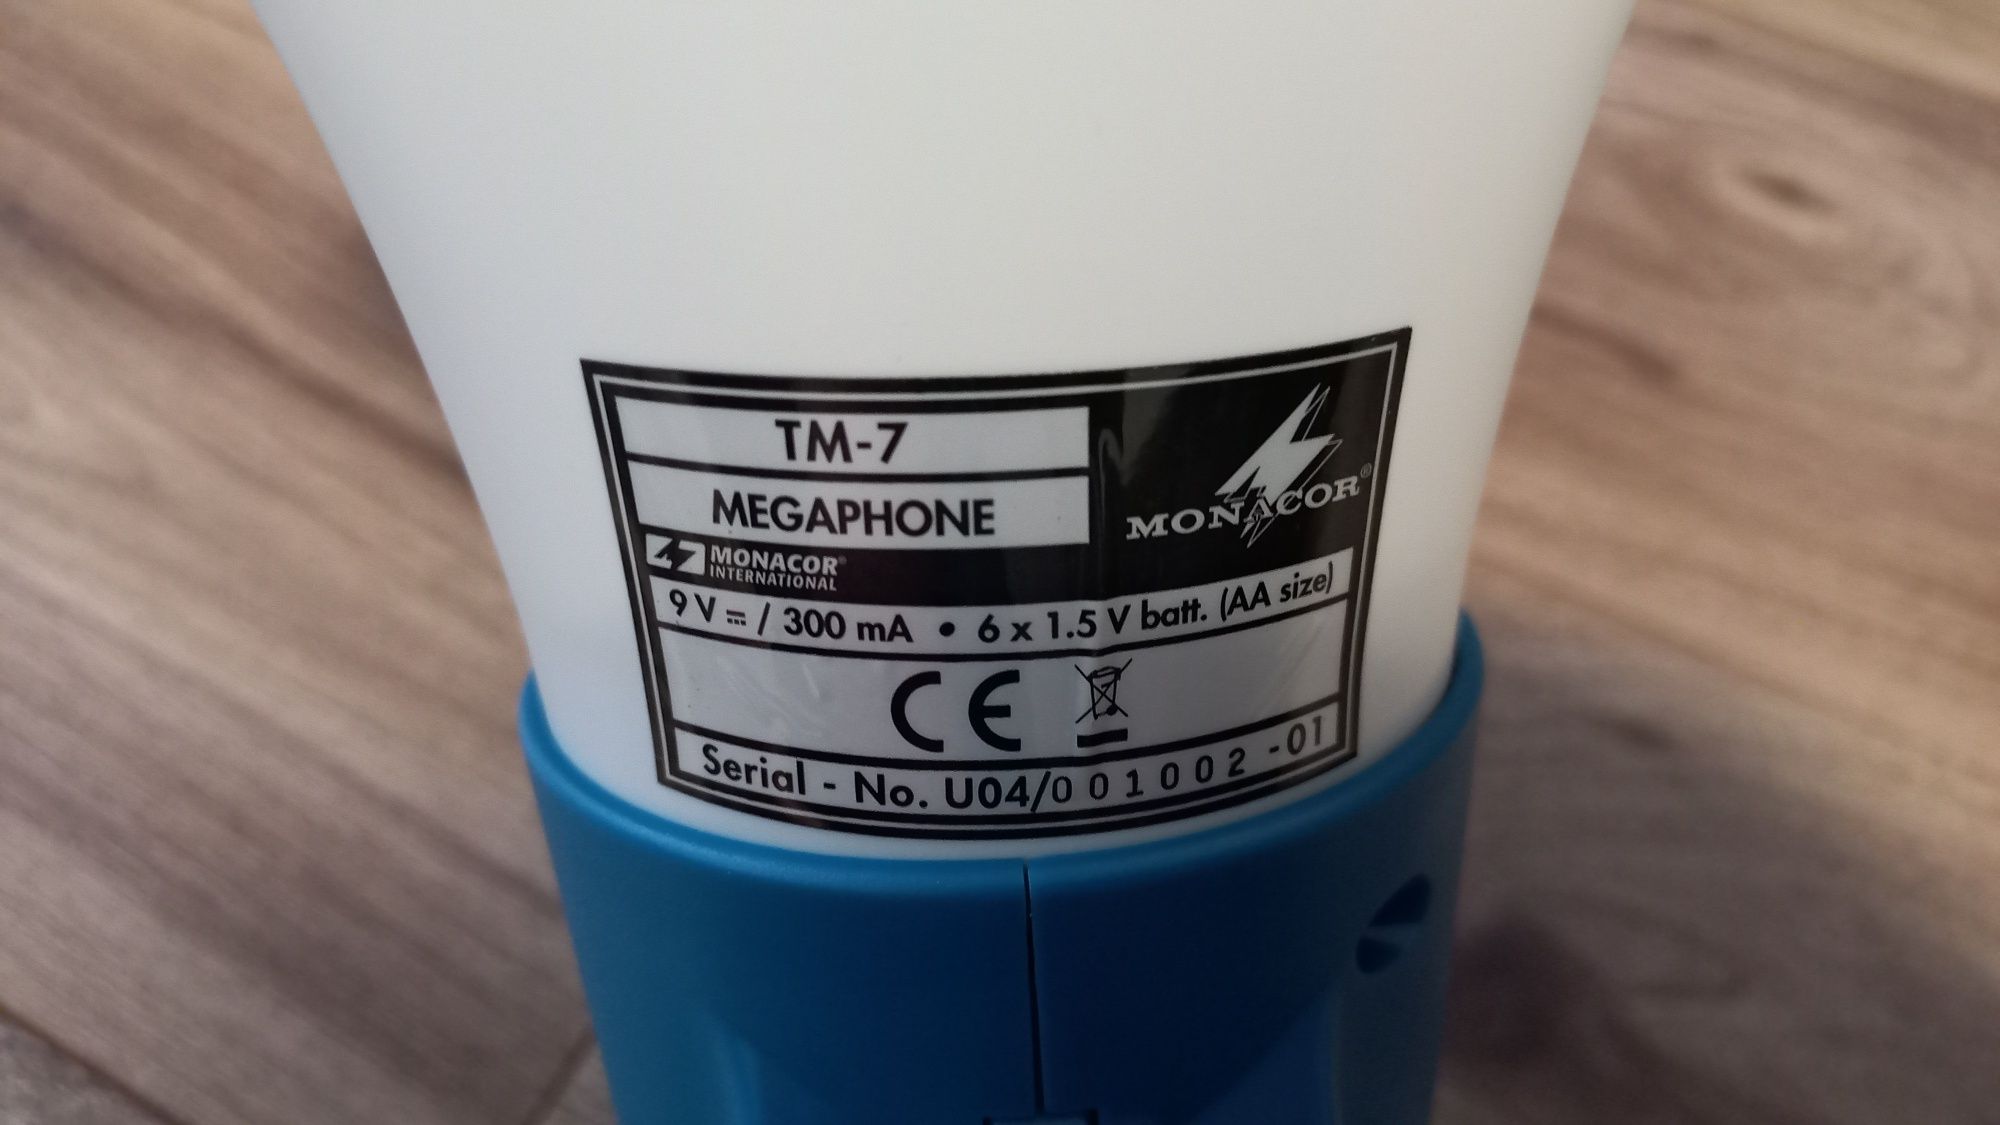 Vand portavoce / megafon TM-7 Monacor nou